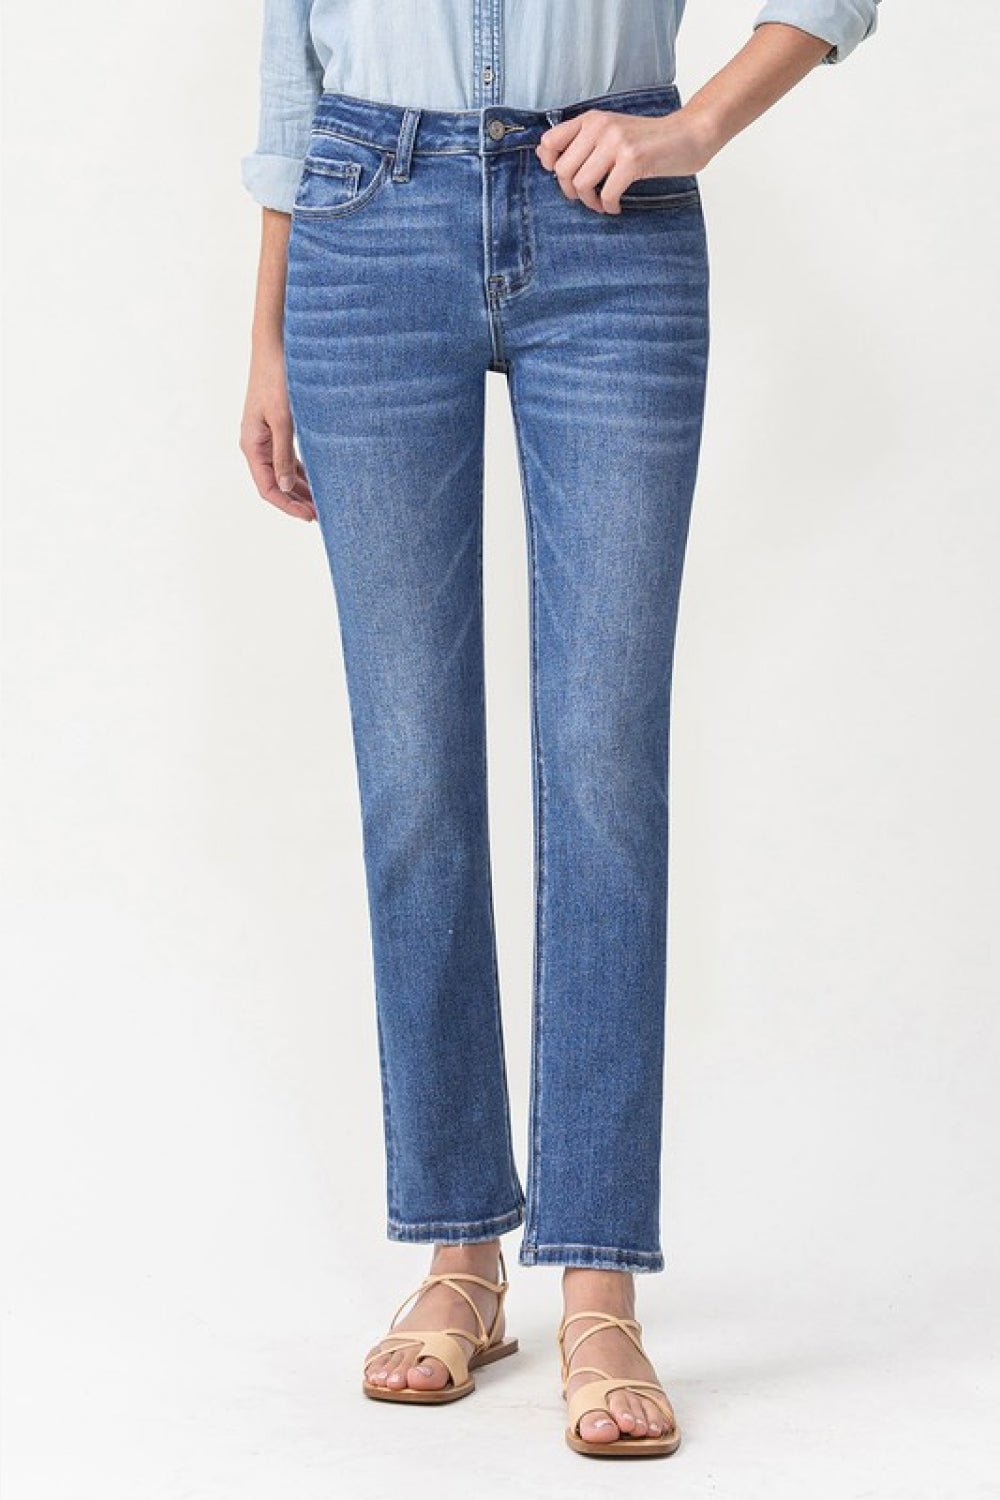 Midrise Slim Ankle Length Straight Leg Medium Wash JeansJeansLovervet